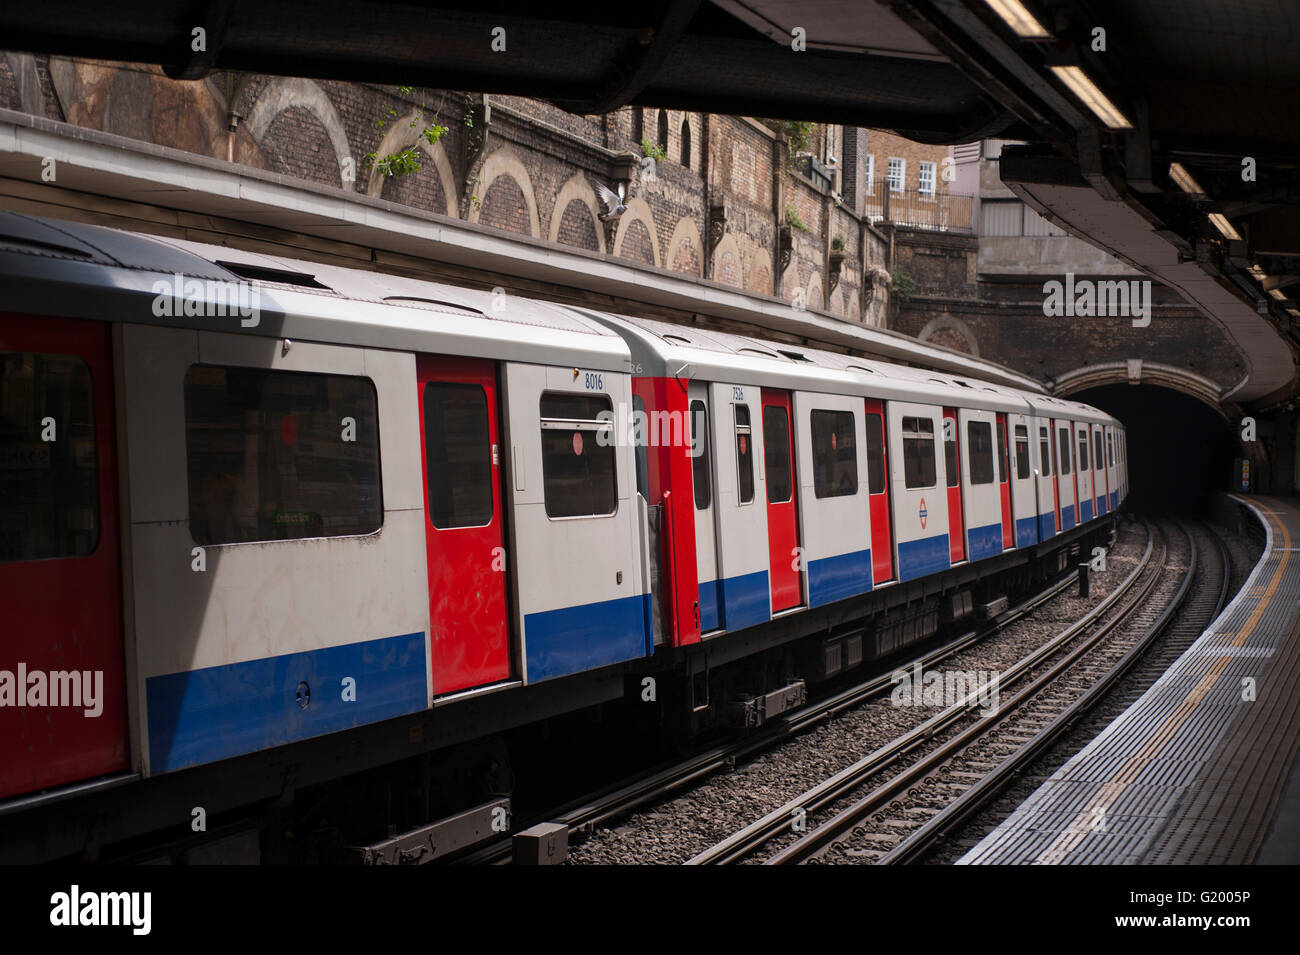 London tube train in Sloane Square station Stock Photo